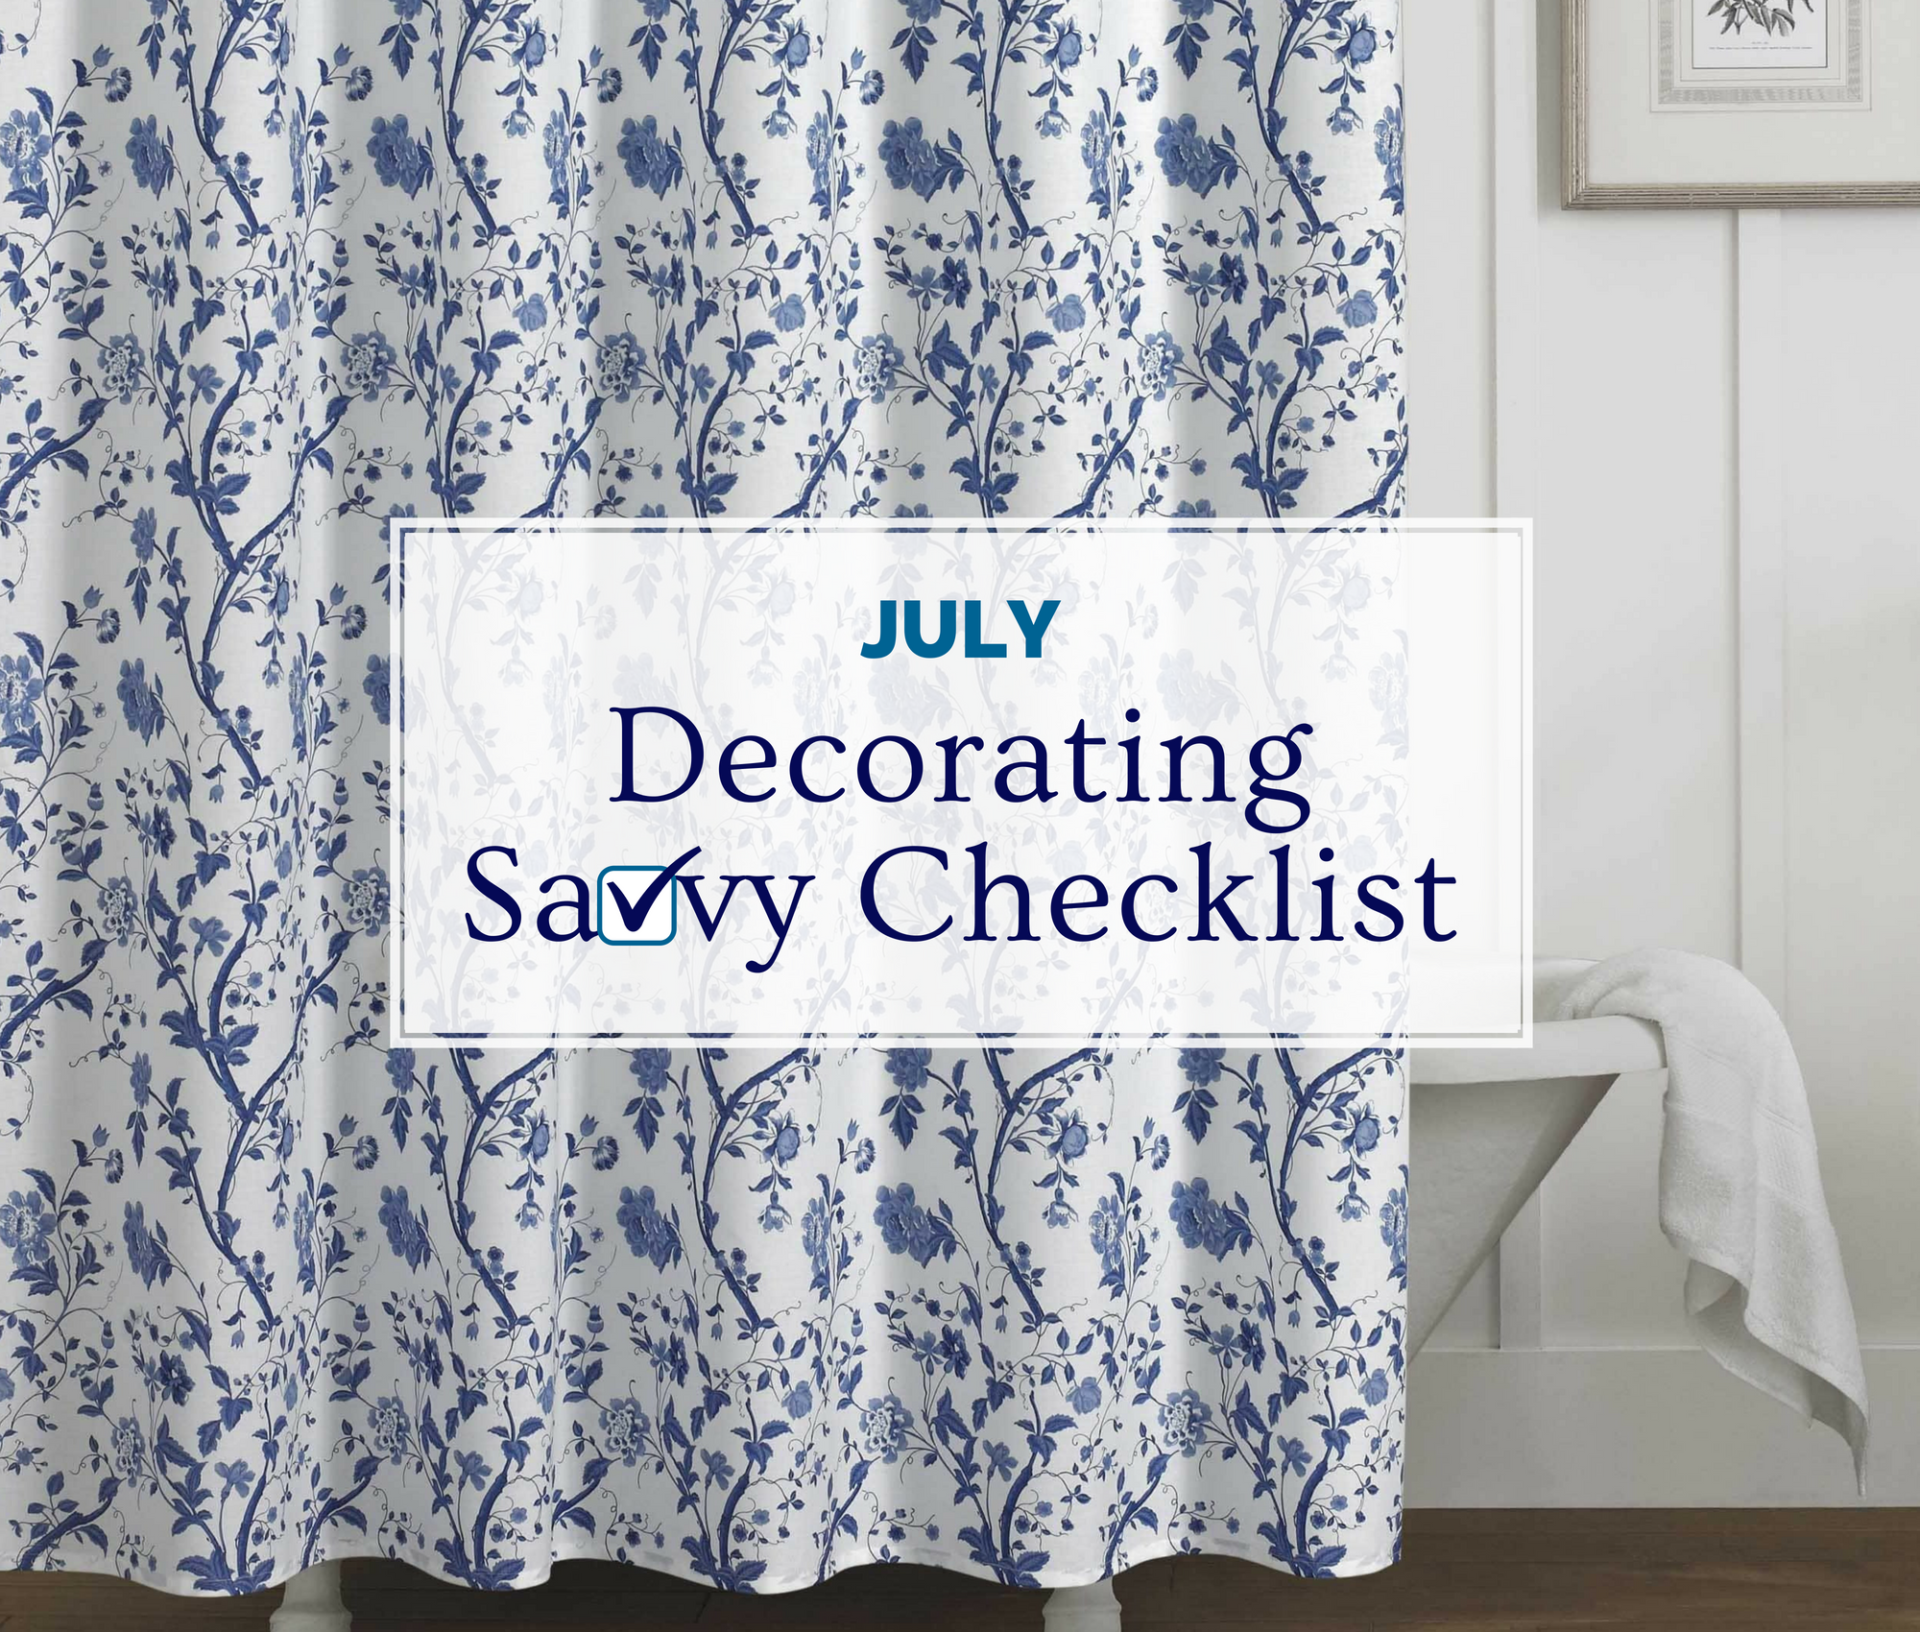 July decorating checklist